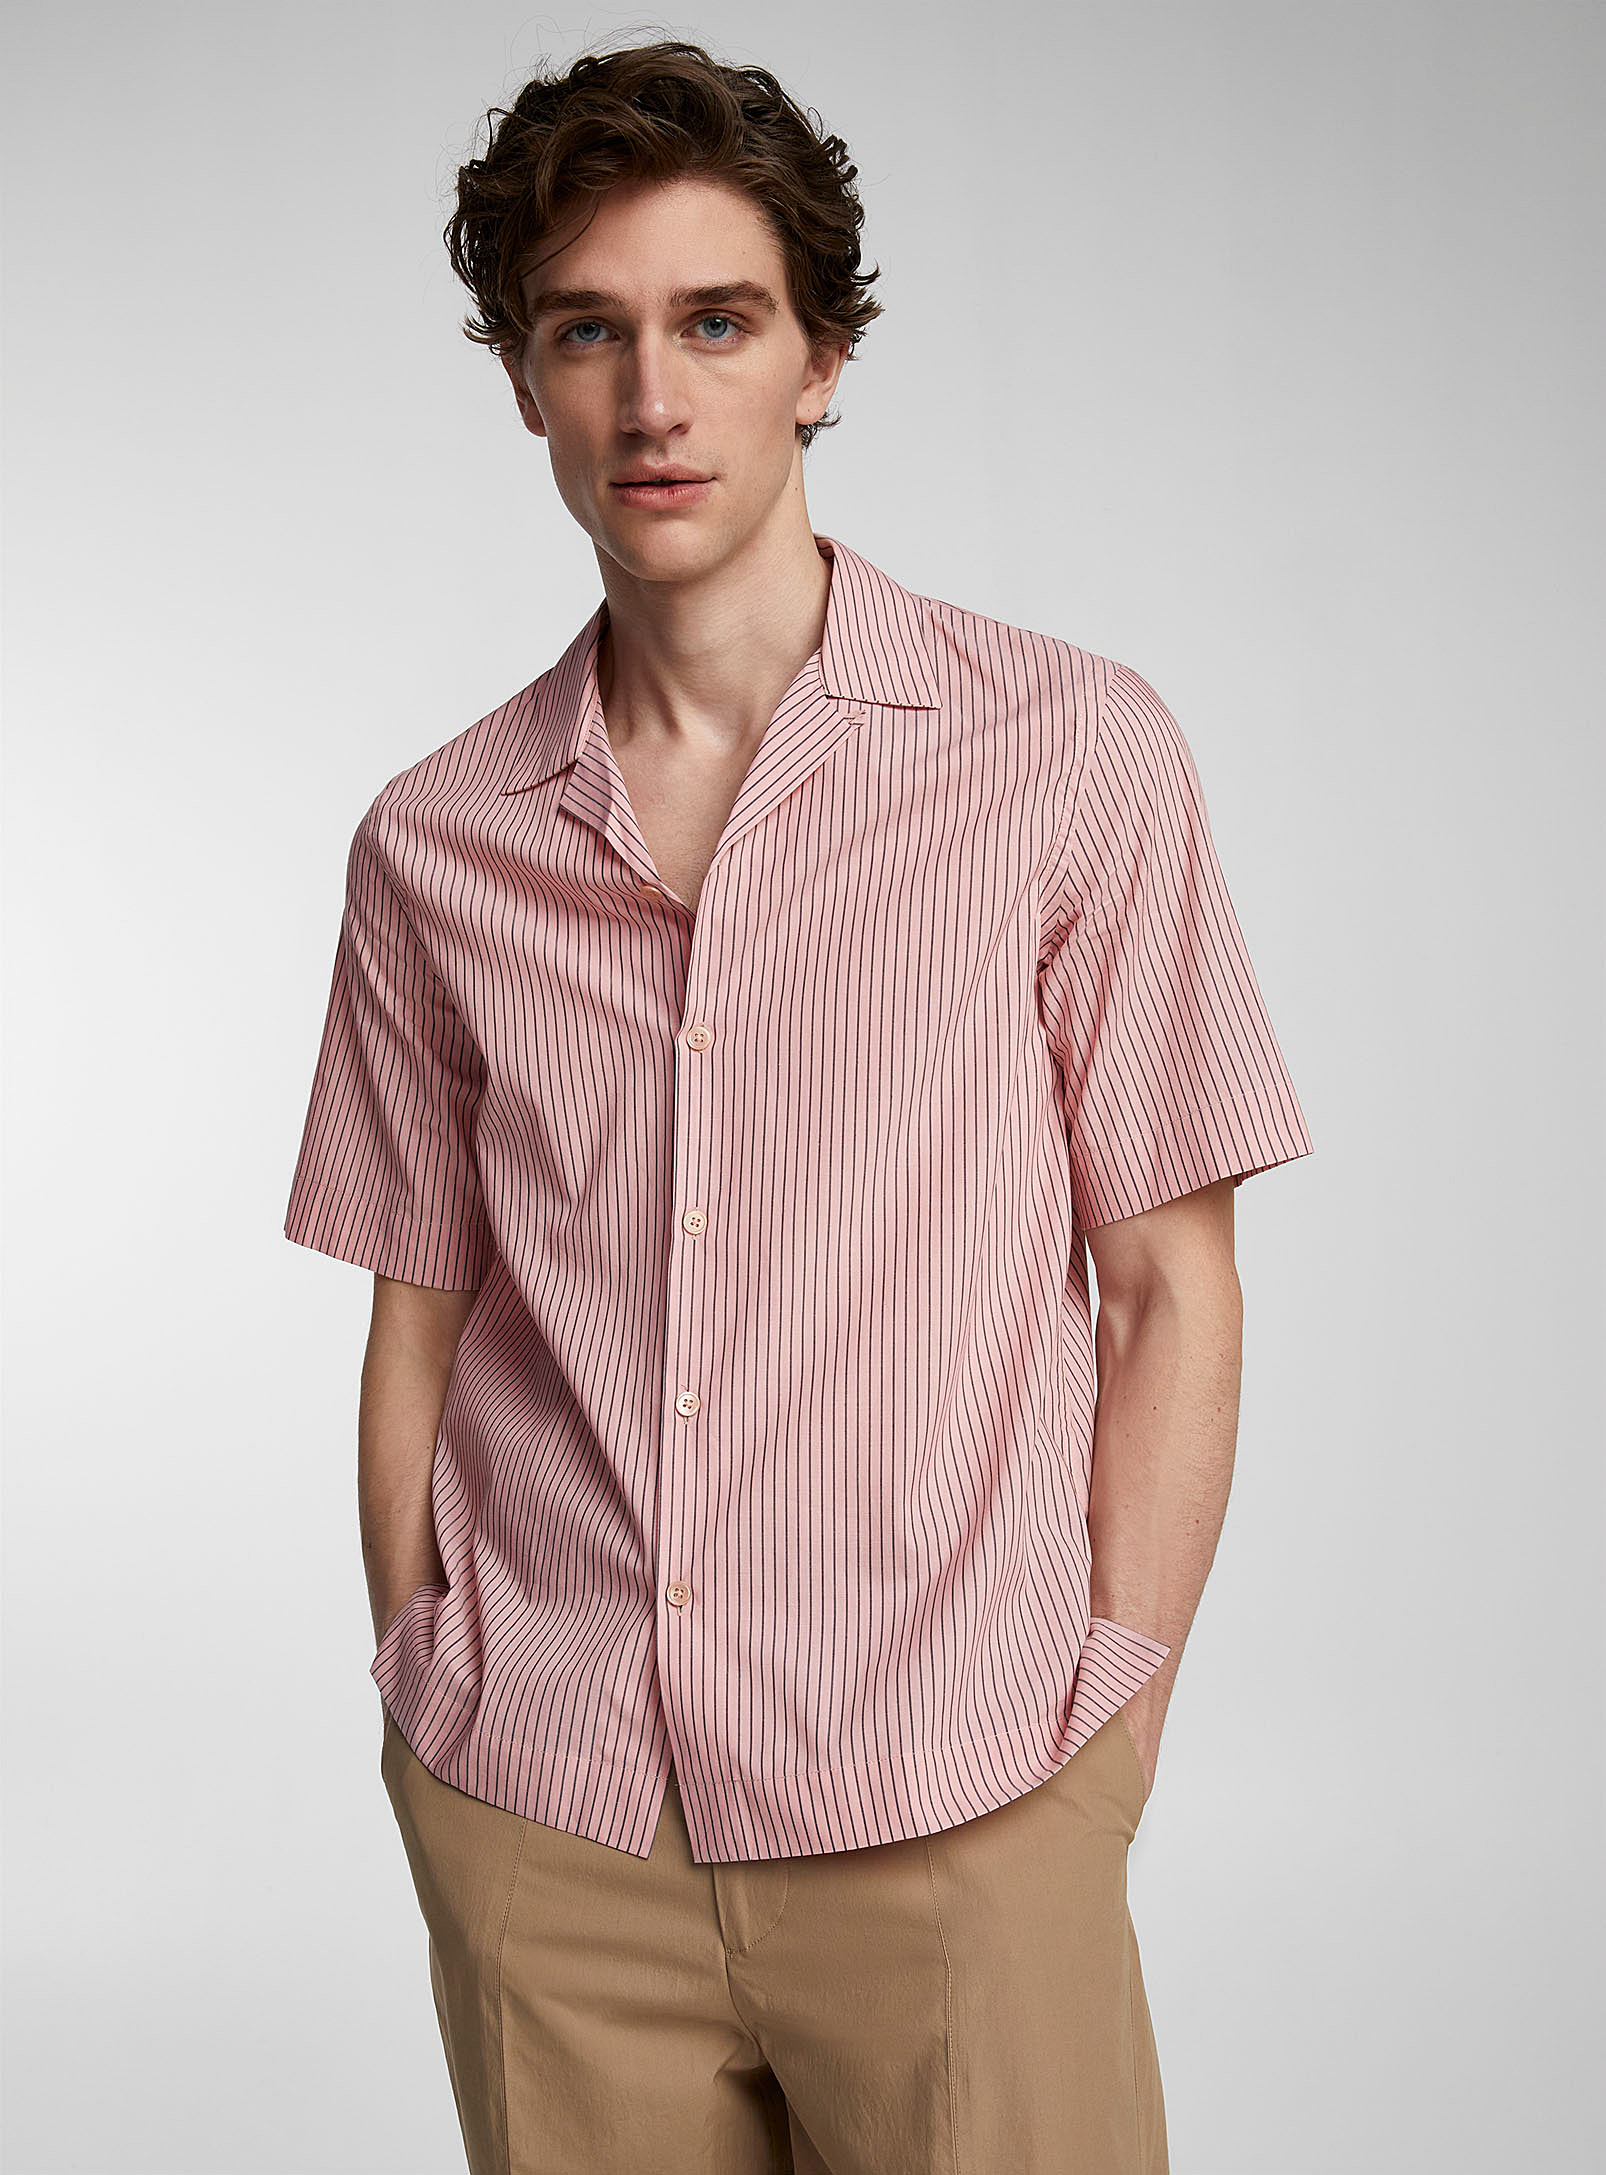 Paul Smith - Men's Pinstriped cotton shirt